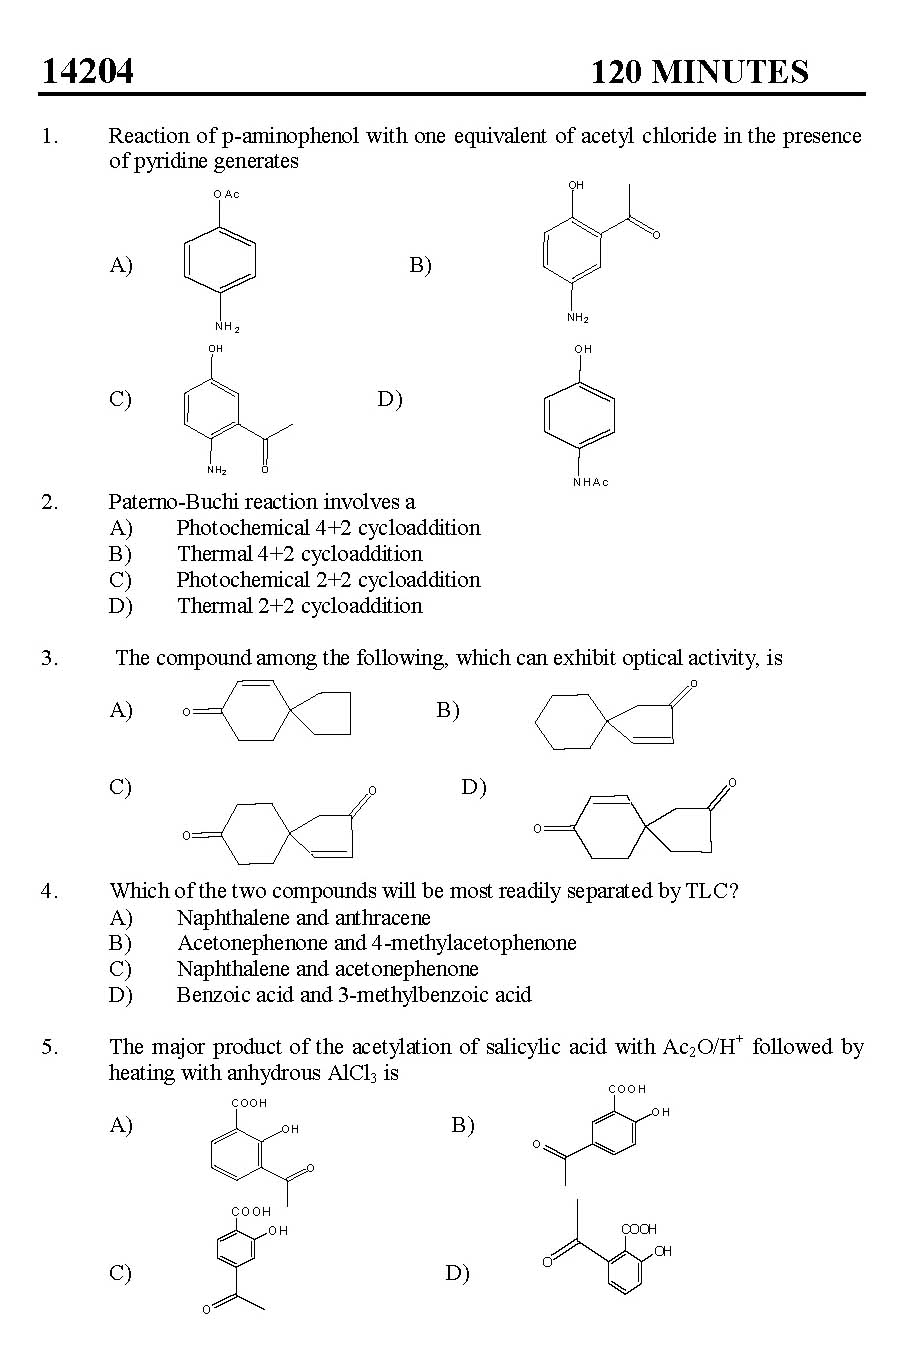 Kerala SET Chemistry Exam 2014 Question Code 14204 1